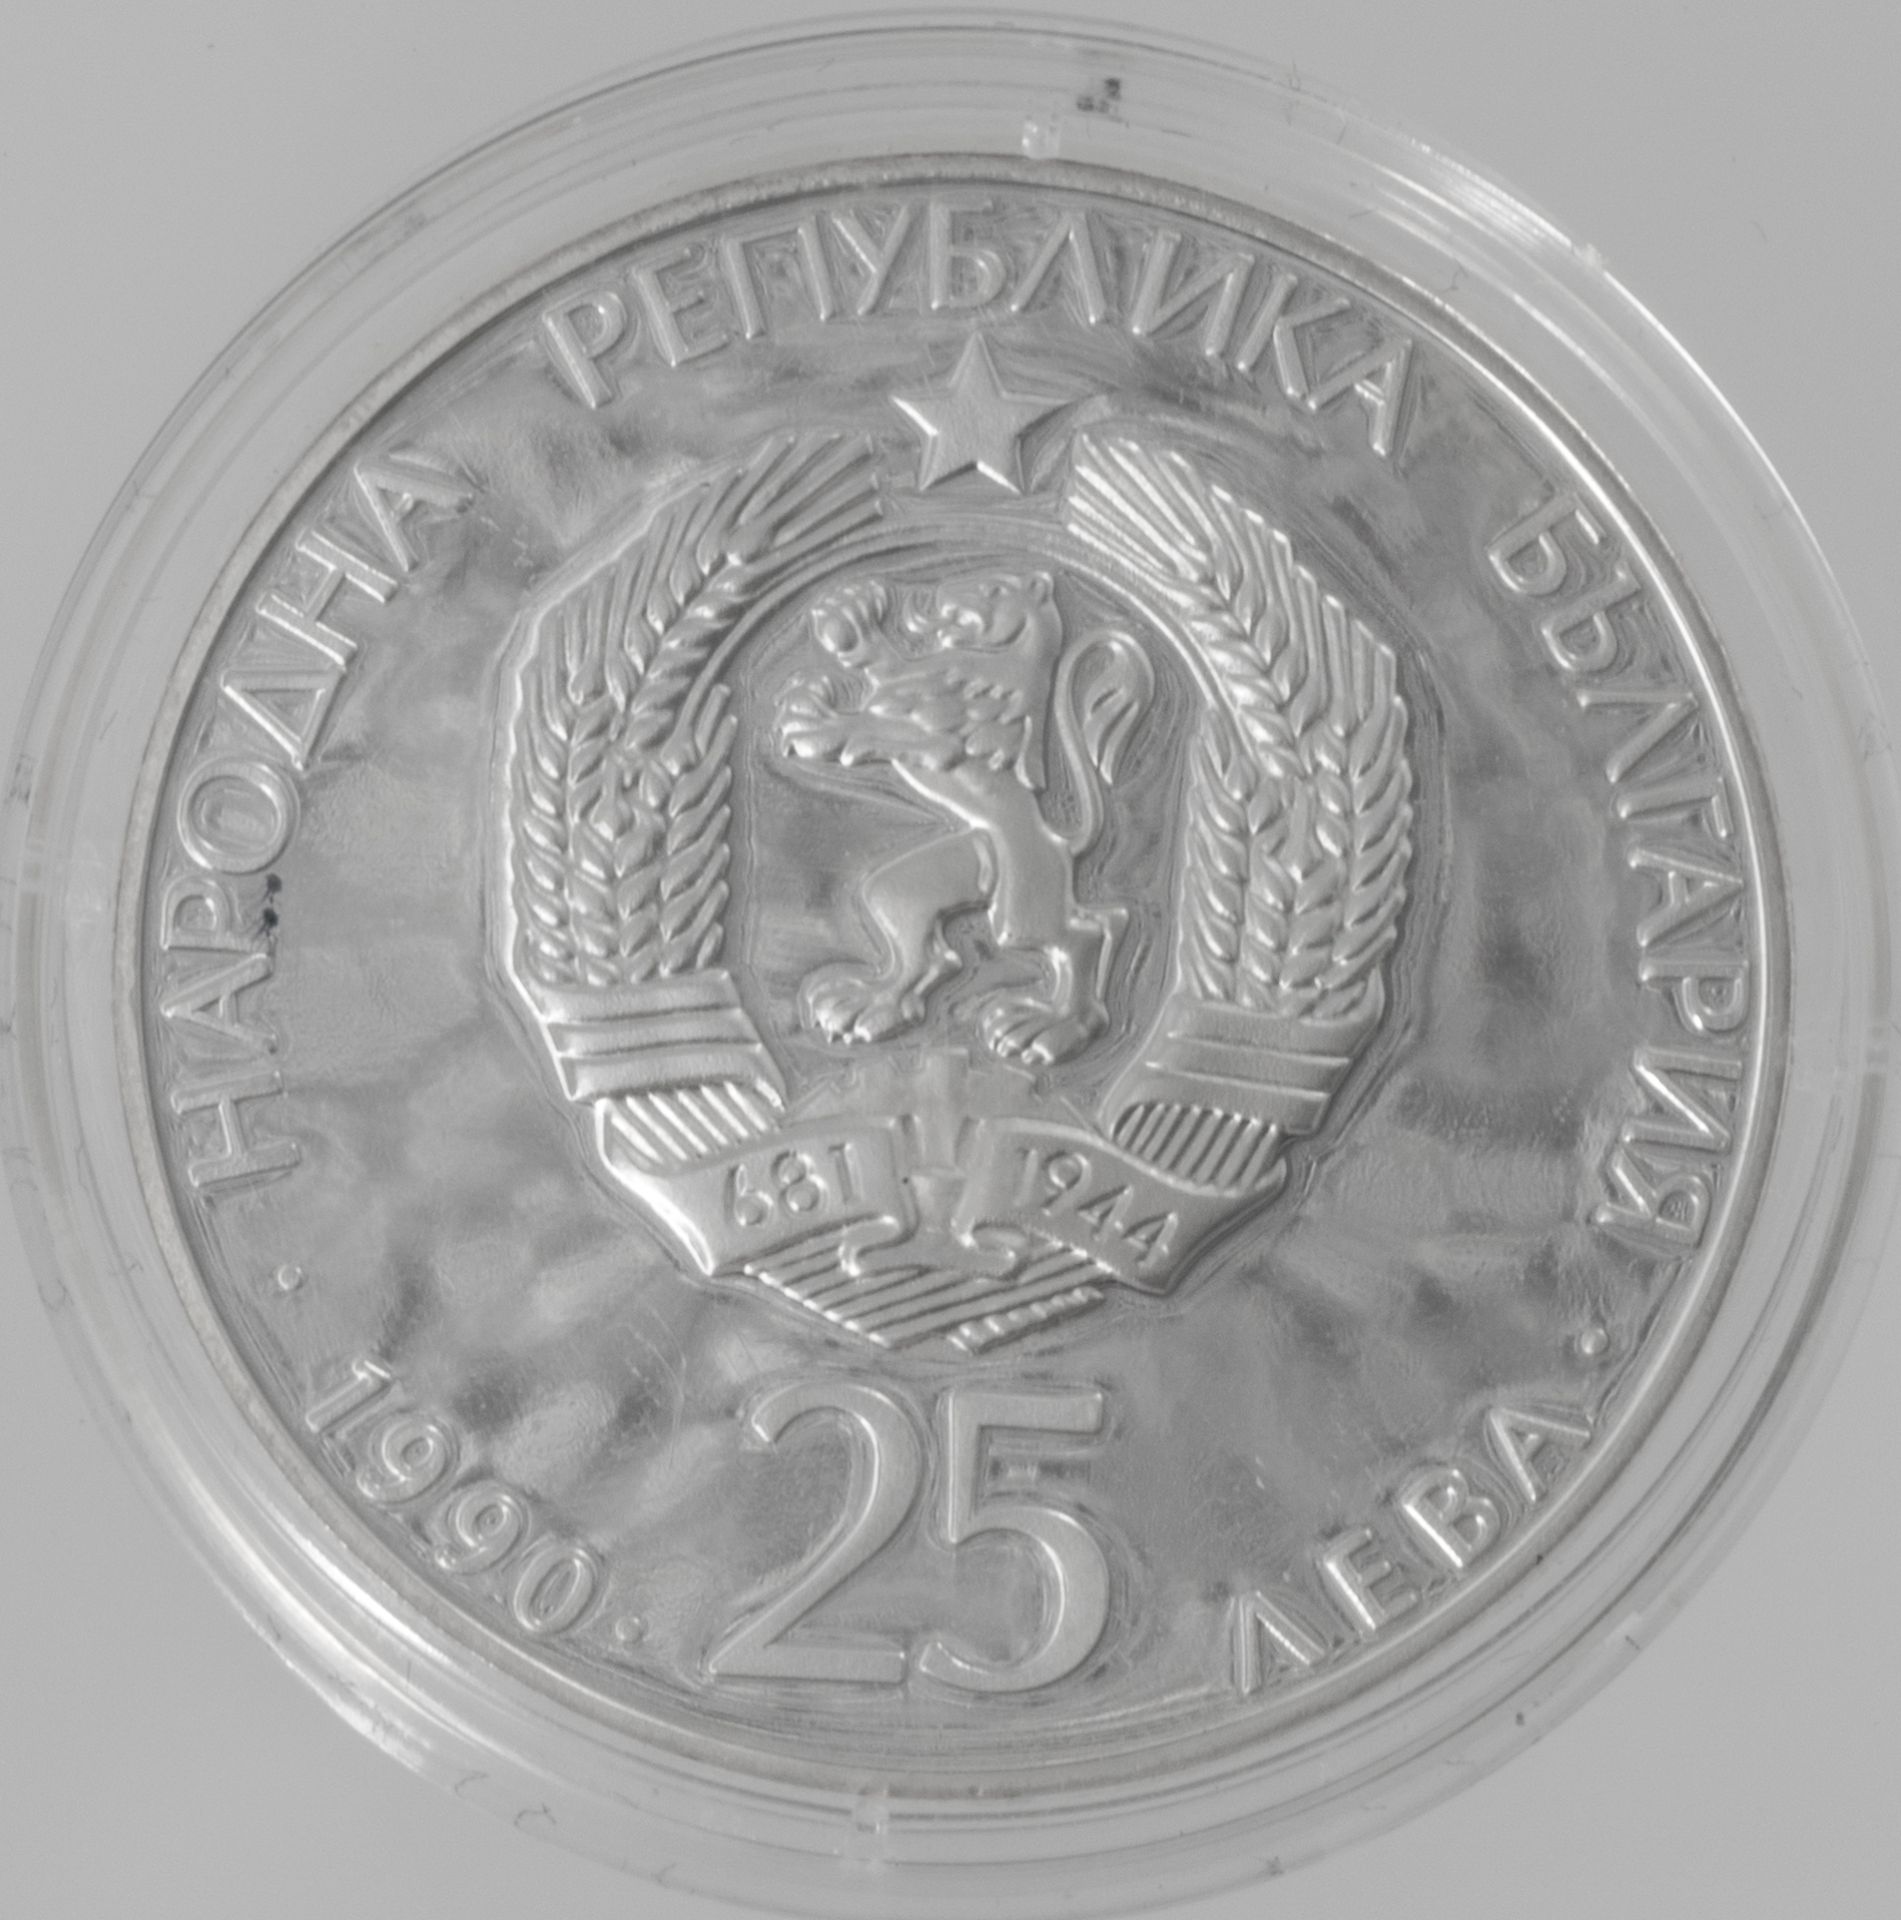 Bulgarien 1990, 25 Lewa - Silbermünze. KM: 192. Erhaltung: PP. In Kapsel. - Bild 2 aus 2